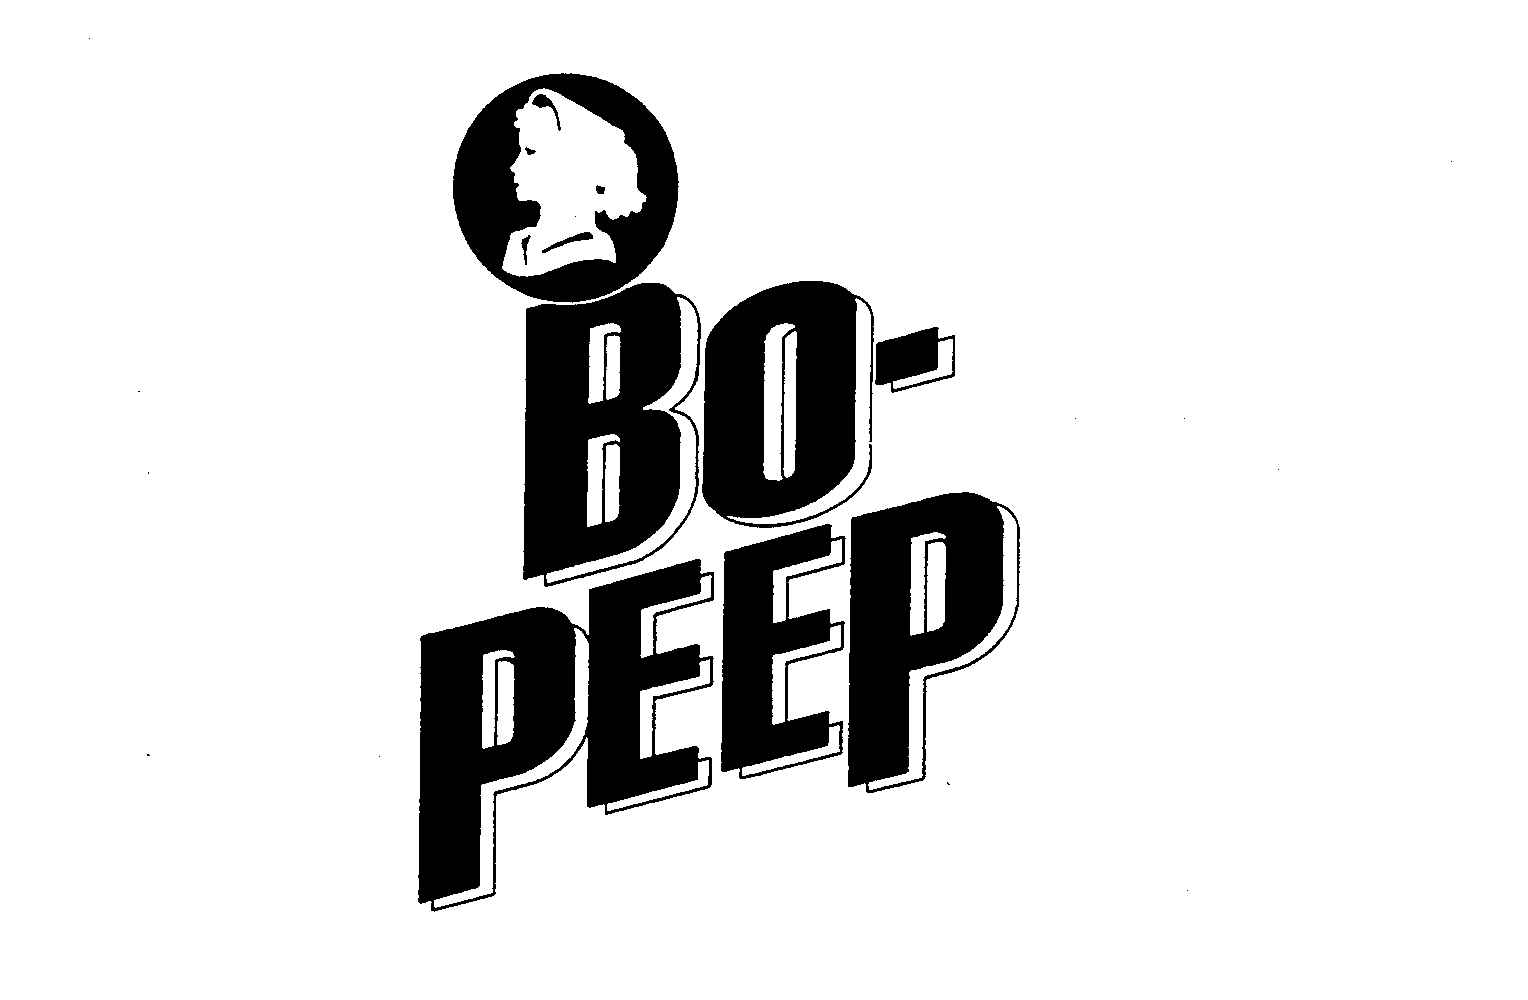 BO-PEEP